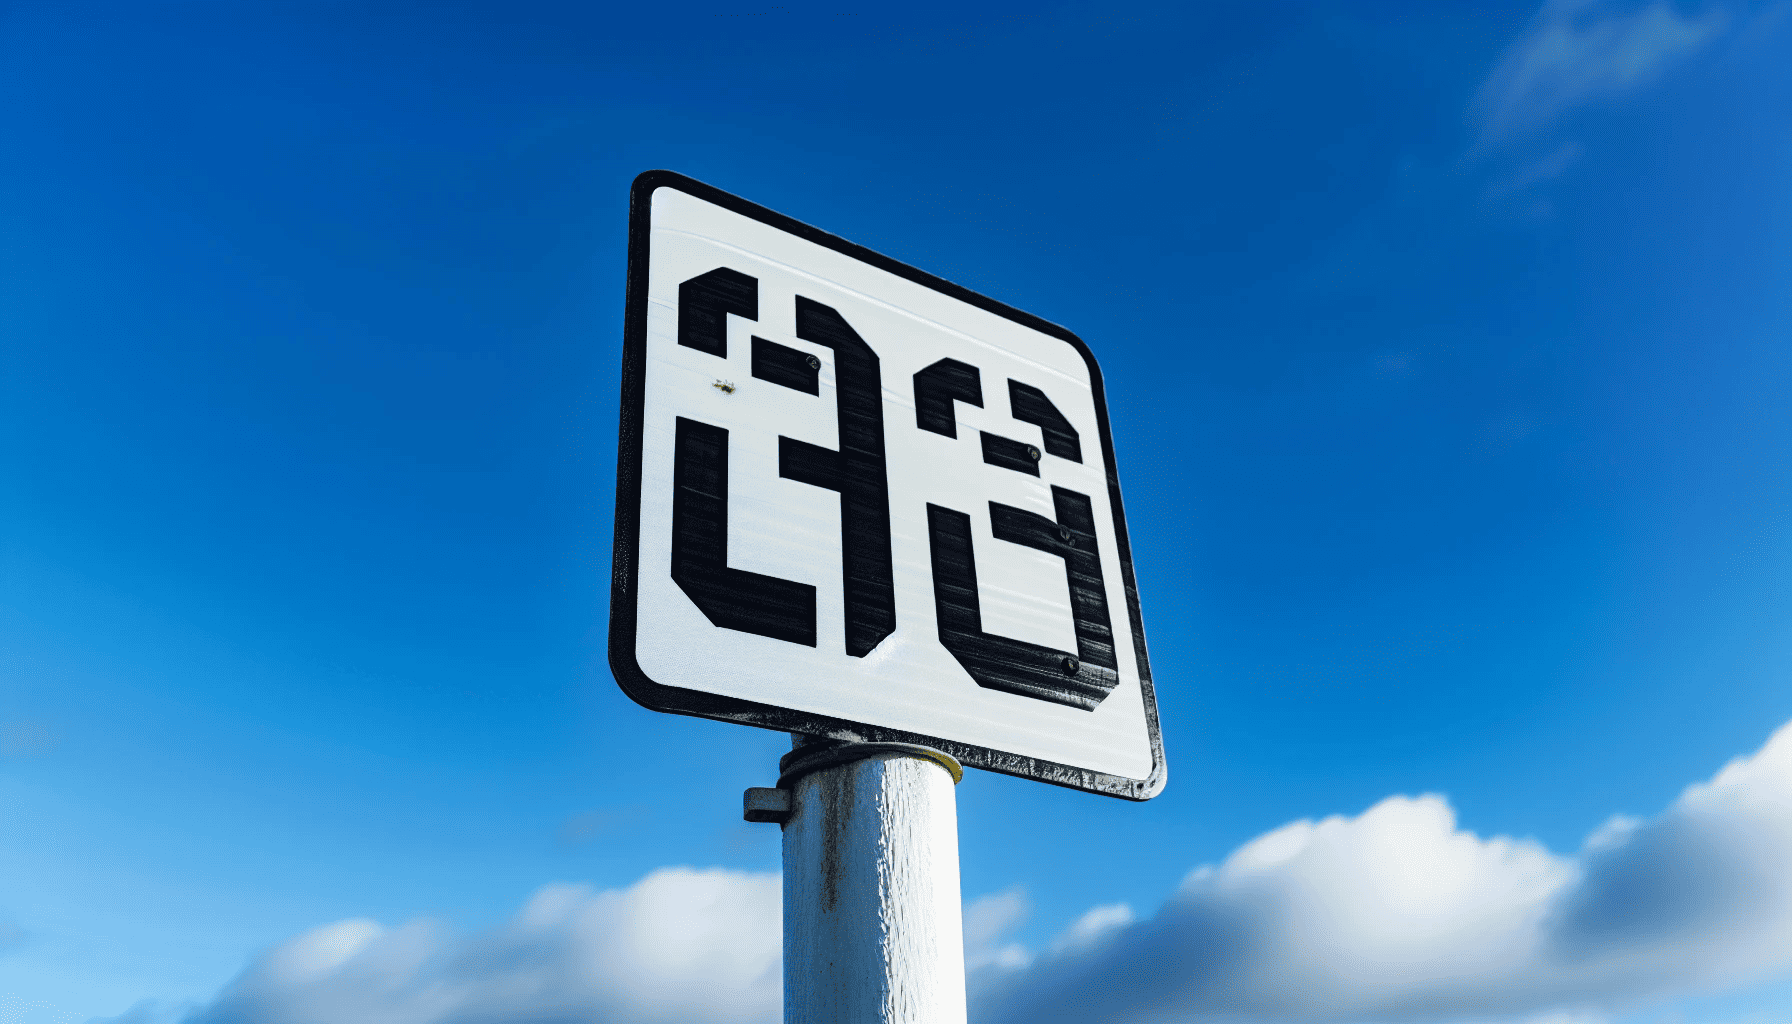 Irish speed limit sign